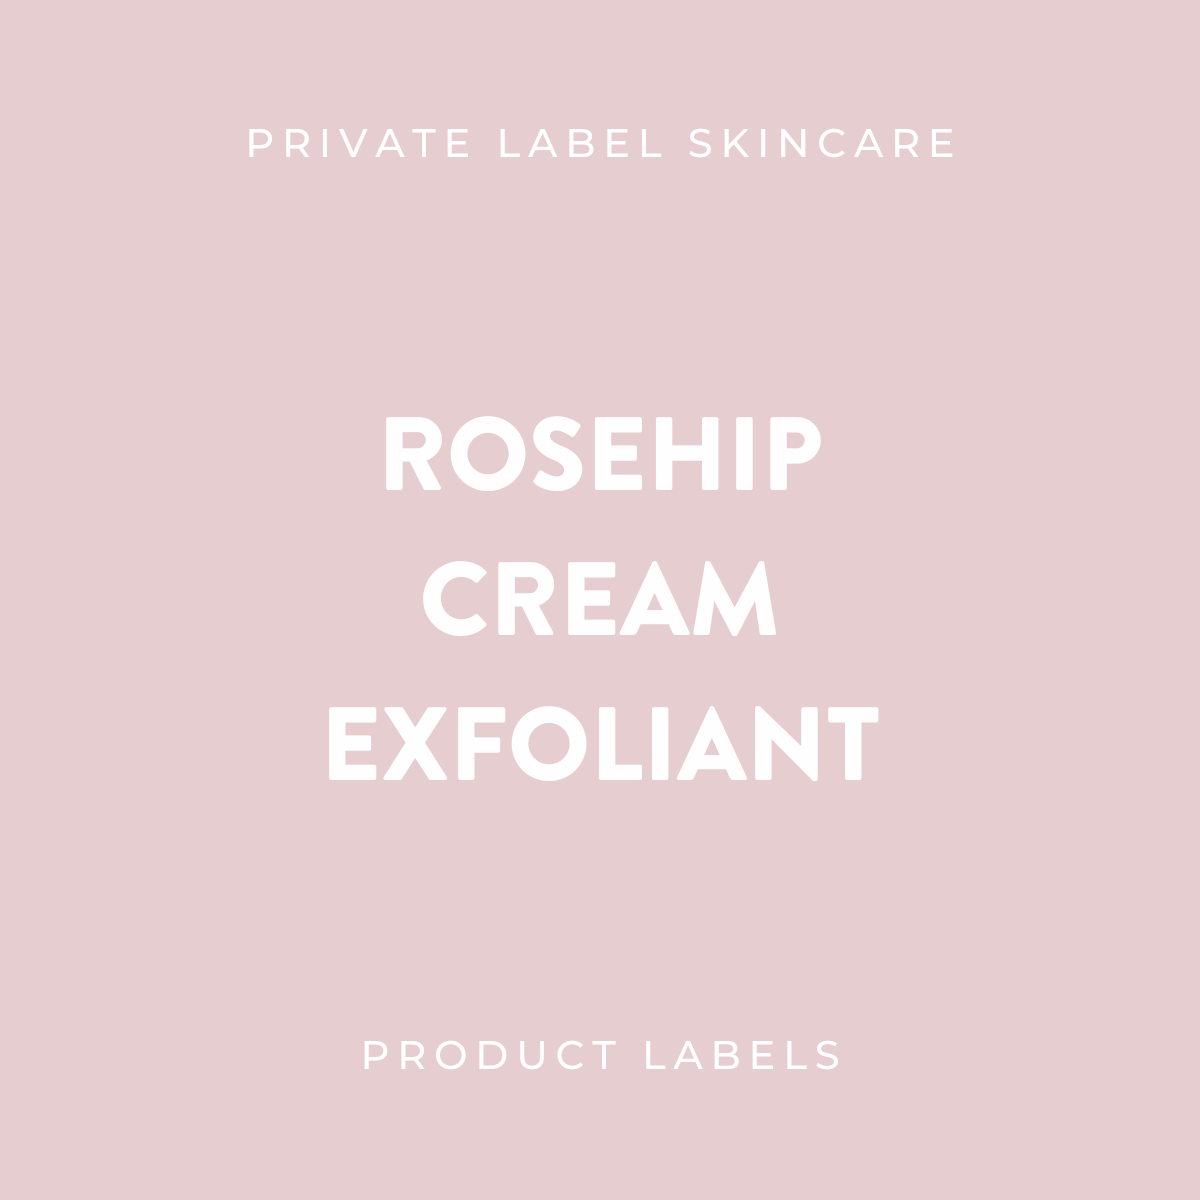 Rosehip Cream Exfoliant Product Labels (x 20 labels)